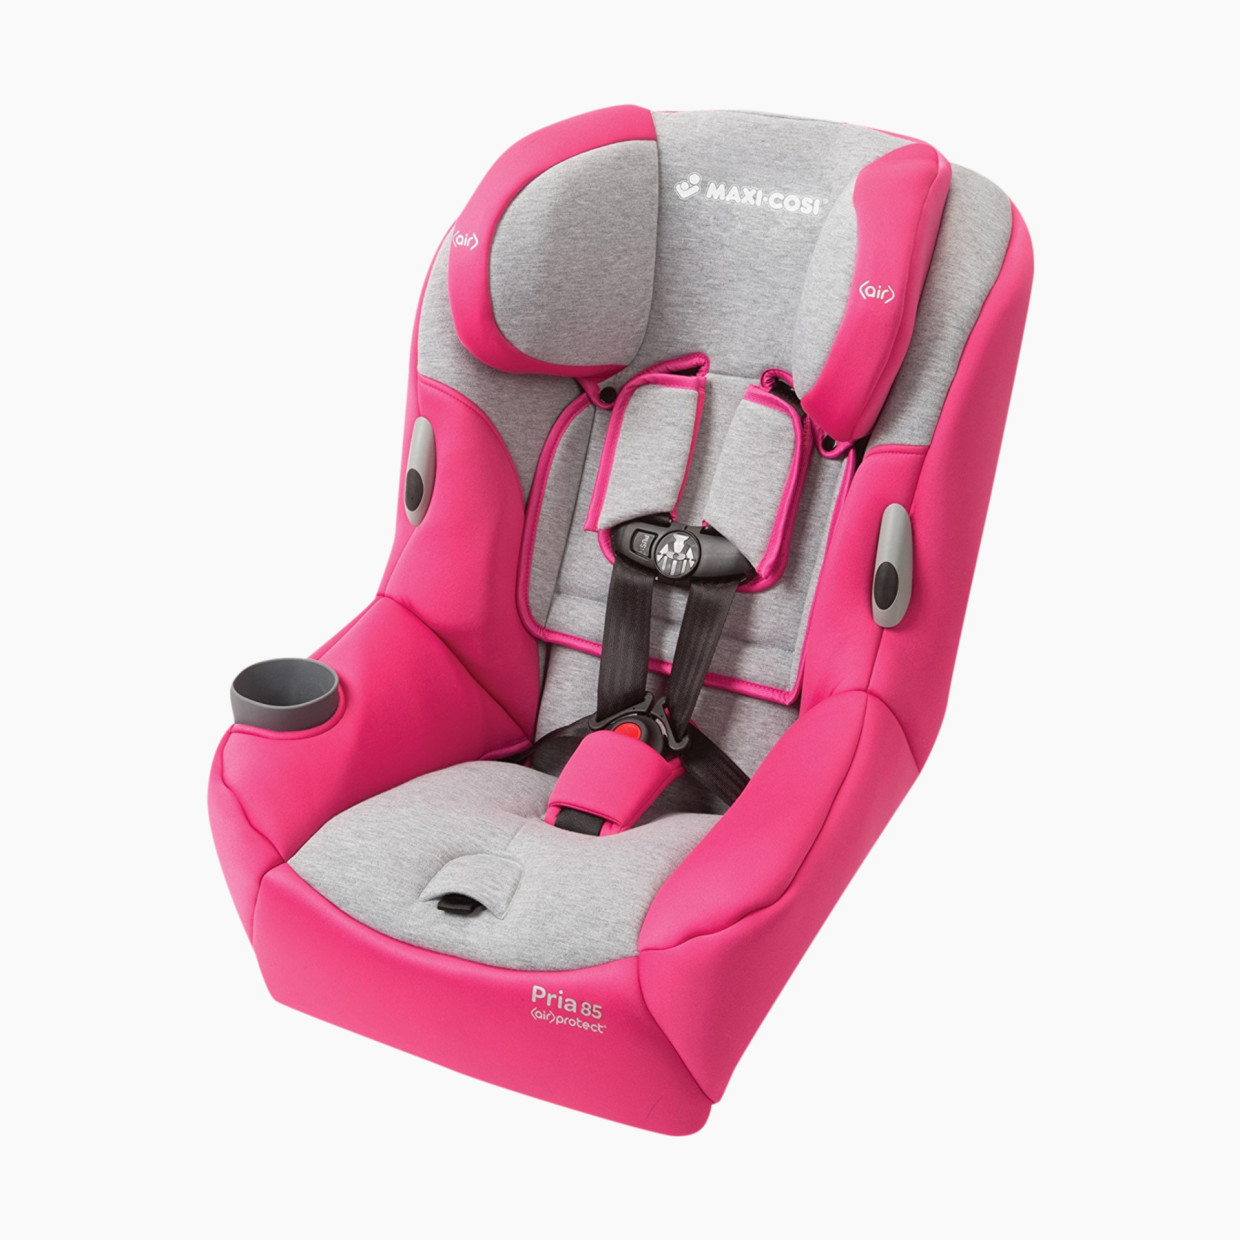 Maxi-Cosi Pria 85 Convertible Car Seat - Passionate Pink.